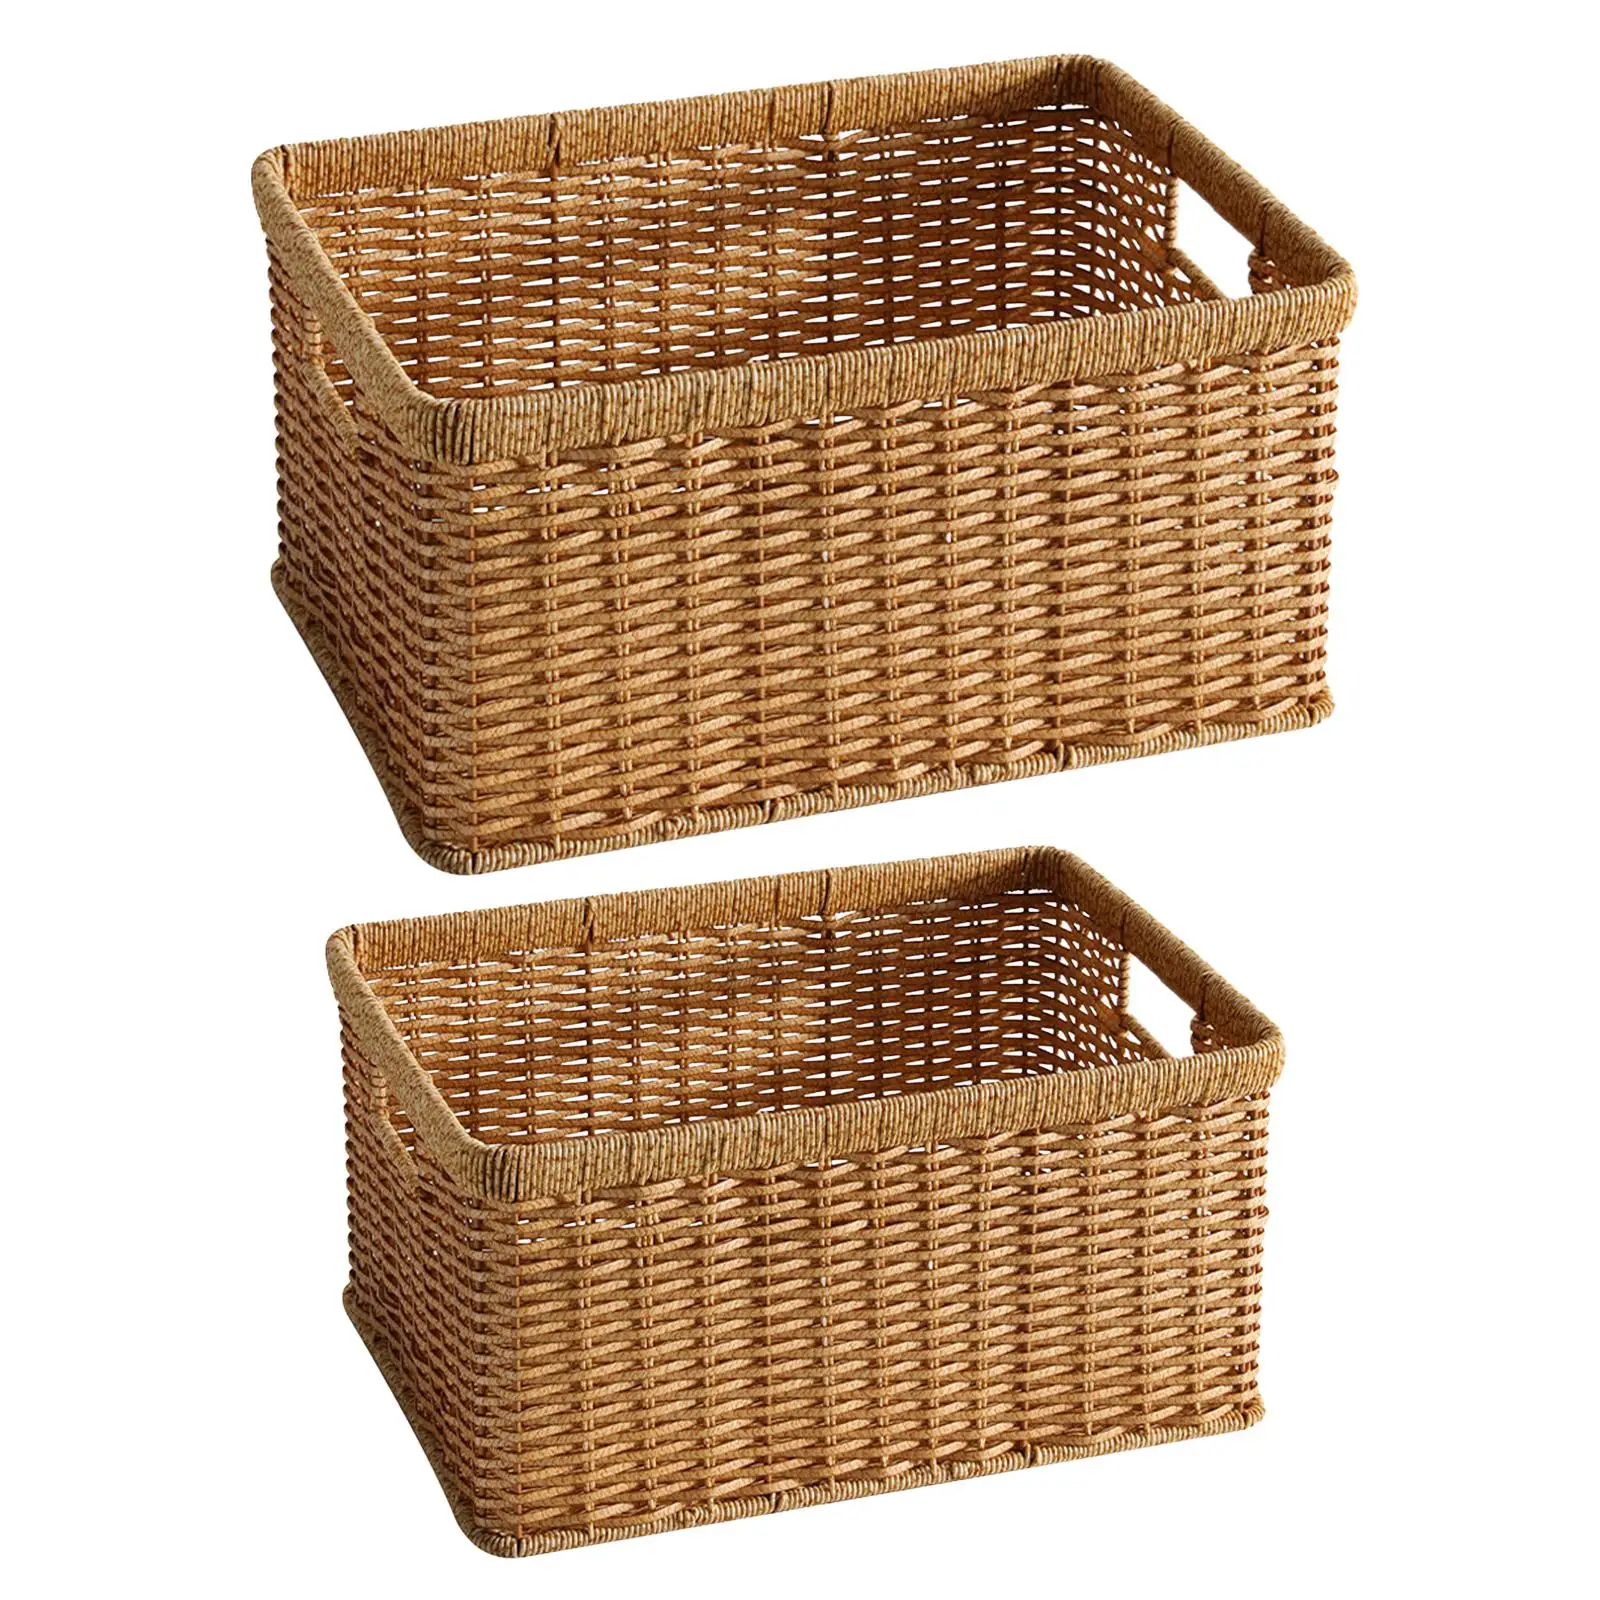 Handmade Basket Rectangle Picnic Basket Storing Snacks, Household Cleaning Hand Woven Storage Basket for Cabinets Bathroom